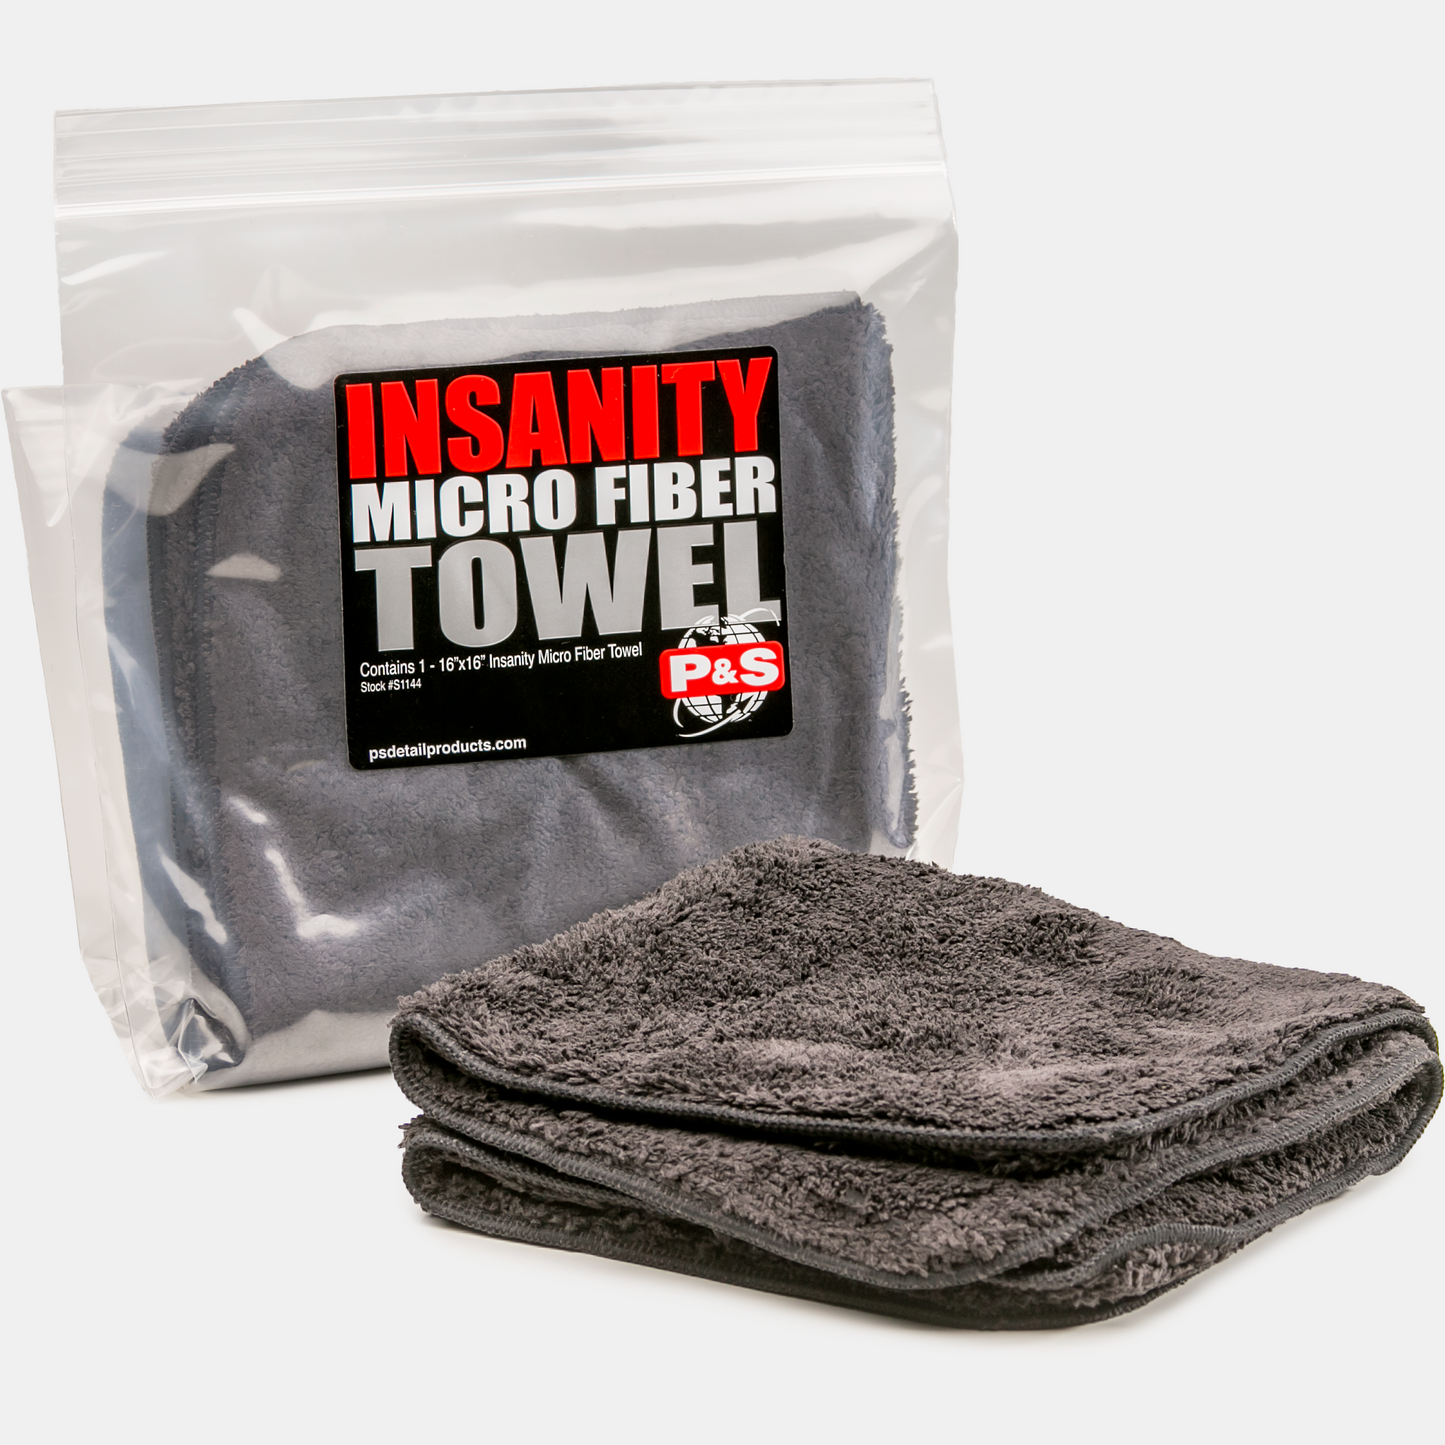 Insanity Micro Fiber Towel - Black